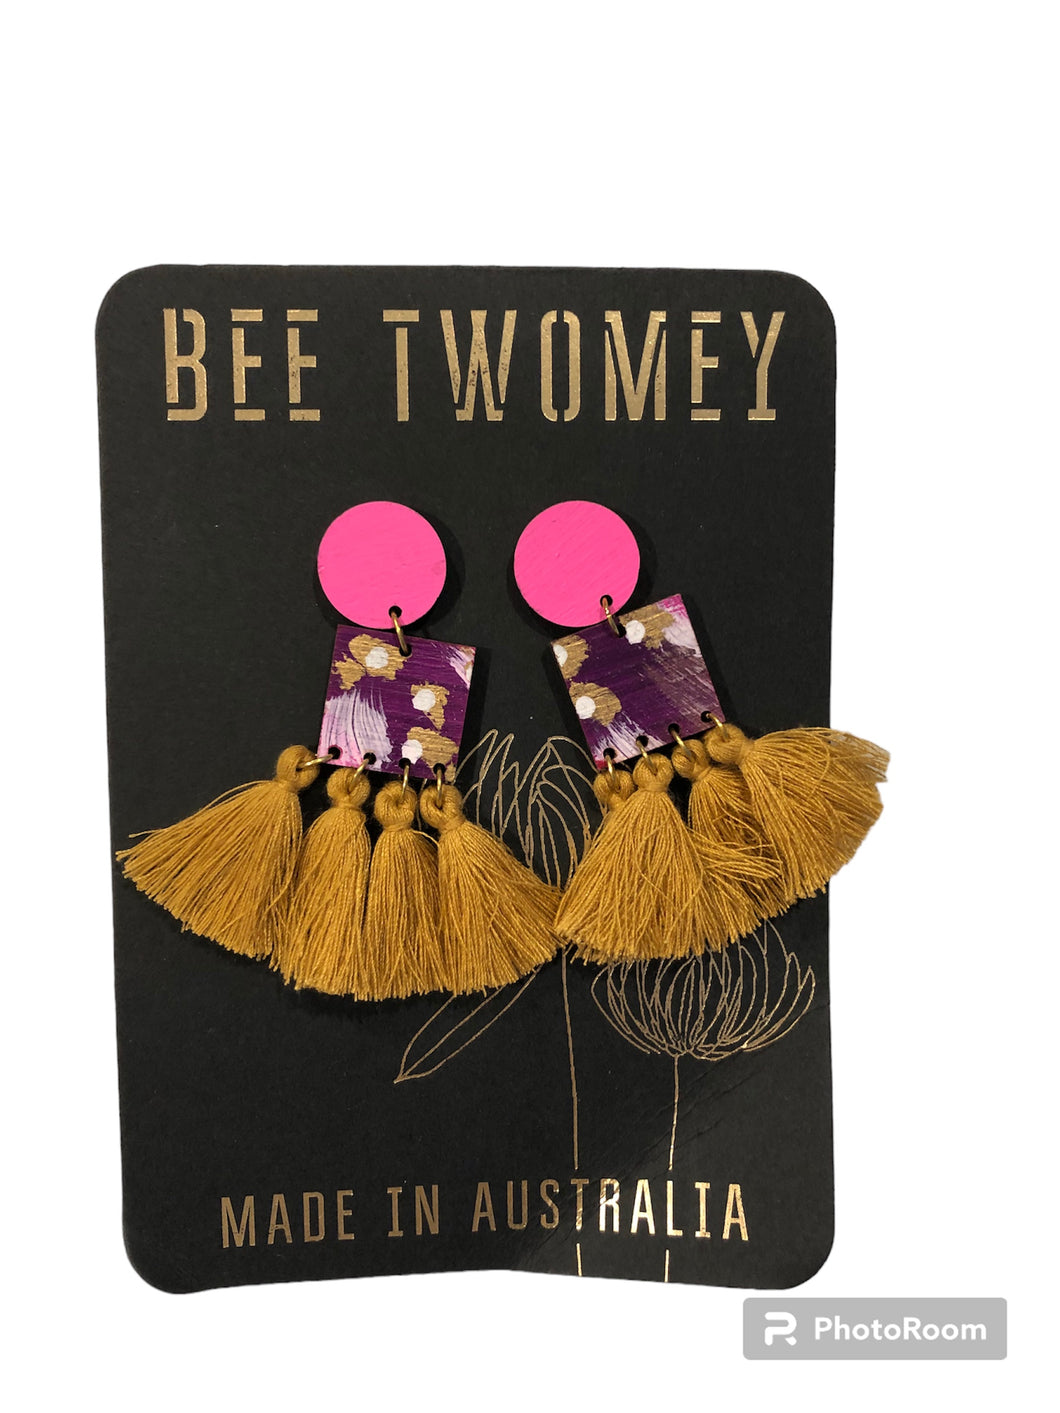 Bee Twomey Drop Earrings - Surgical Steel Posts